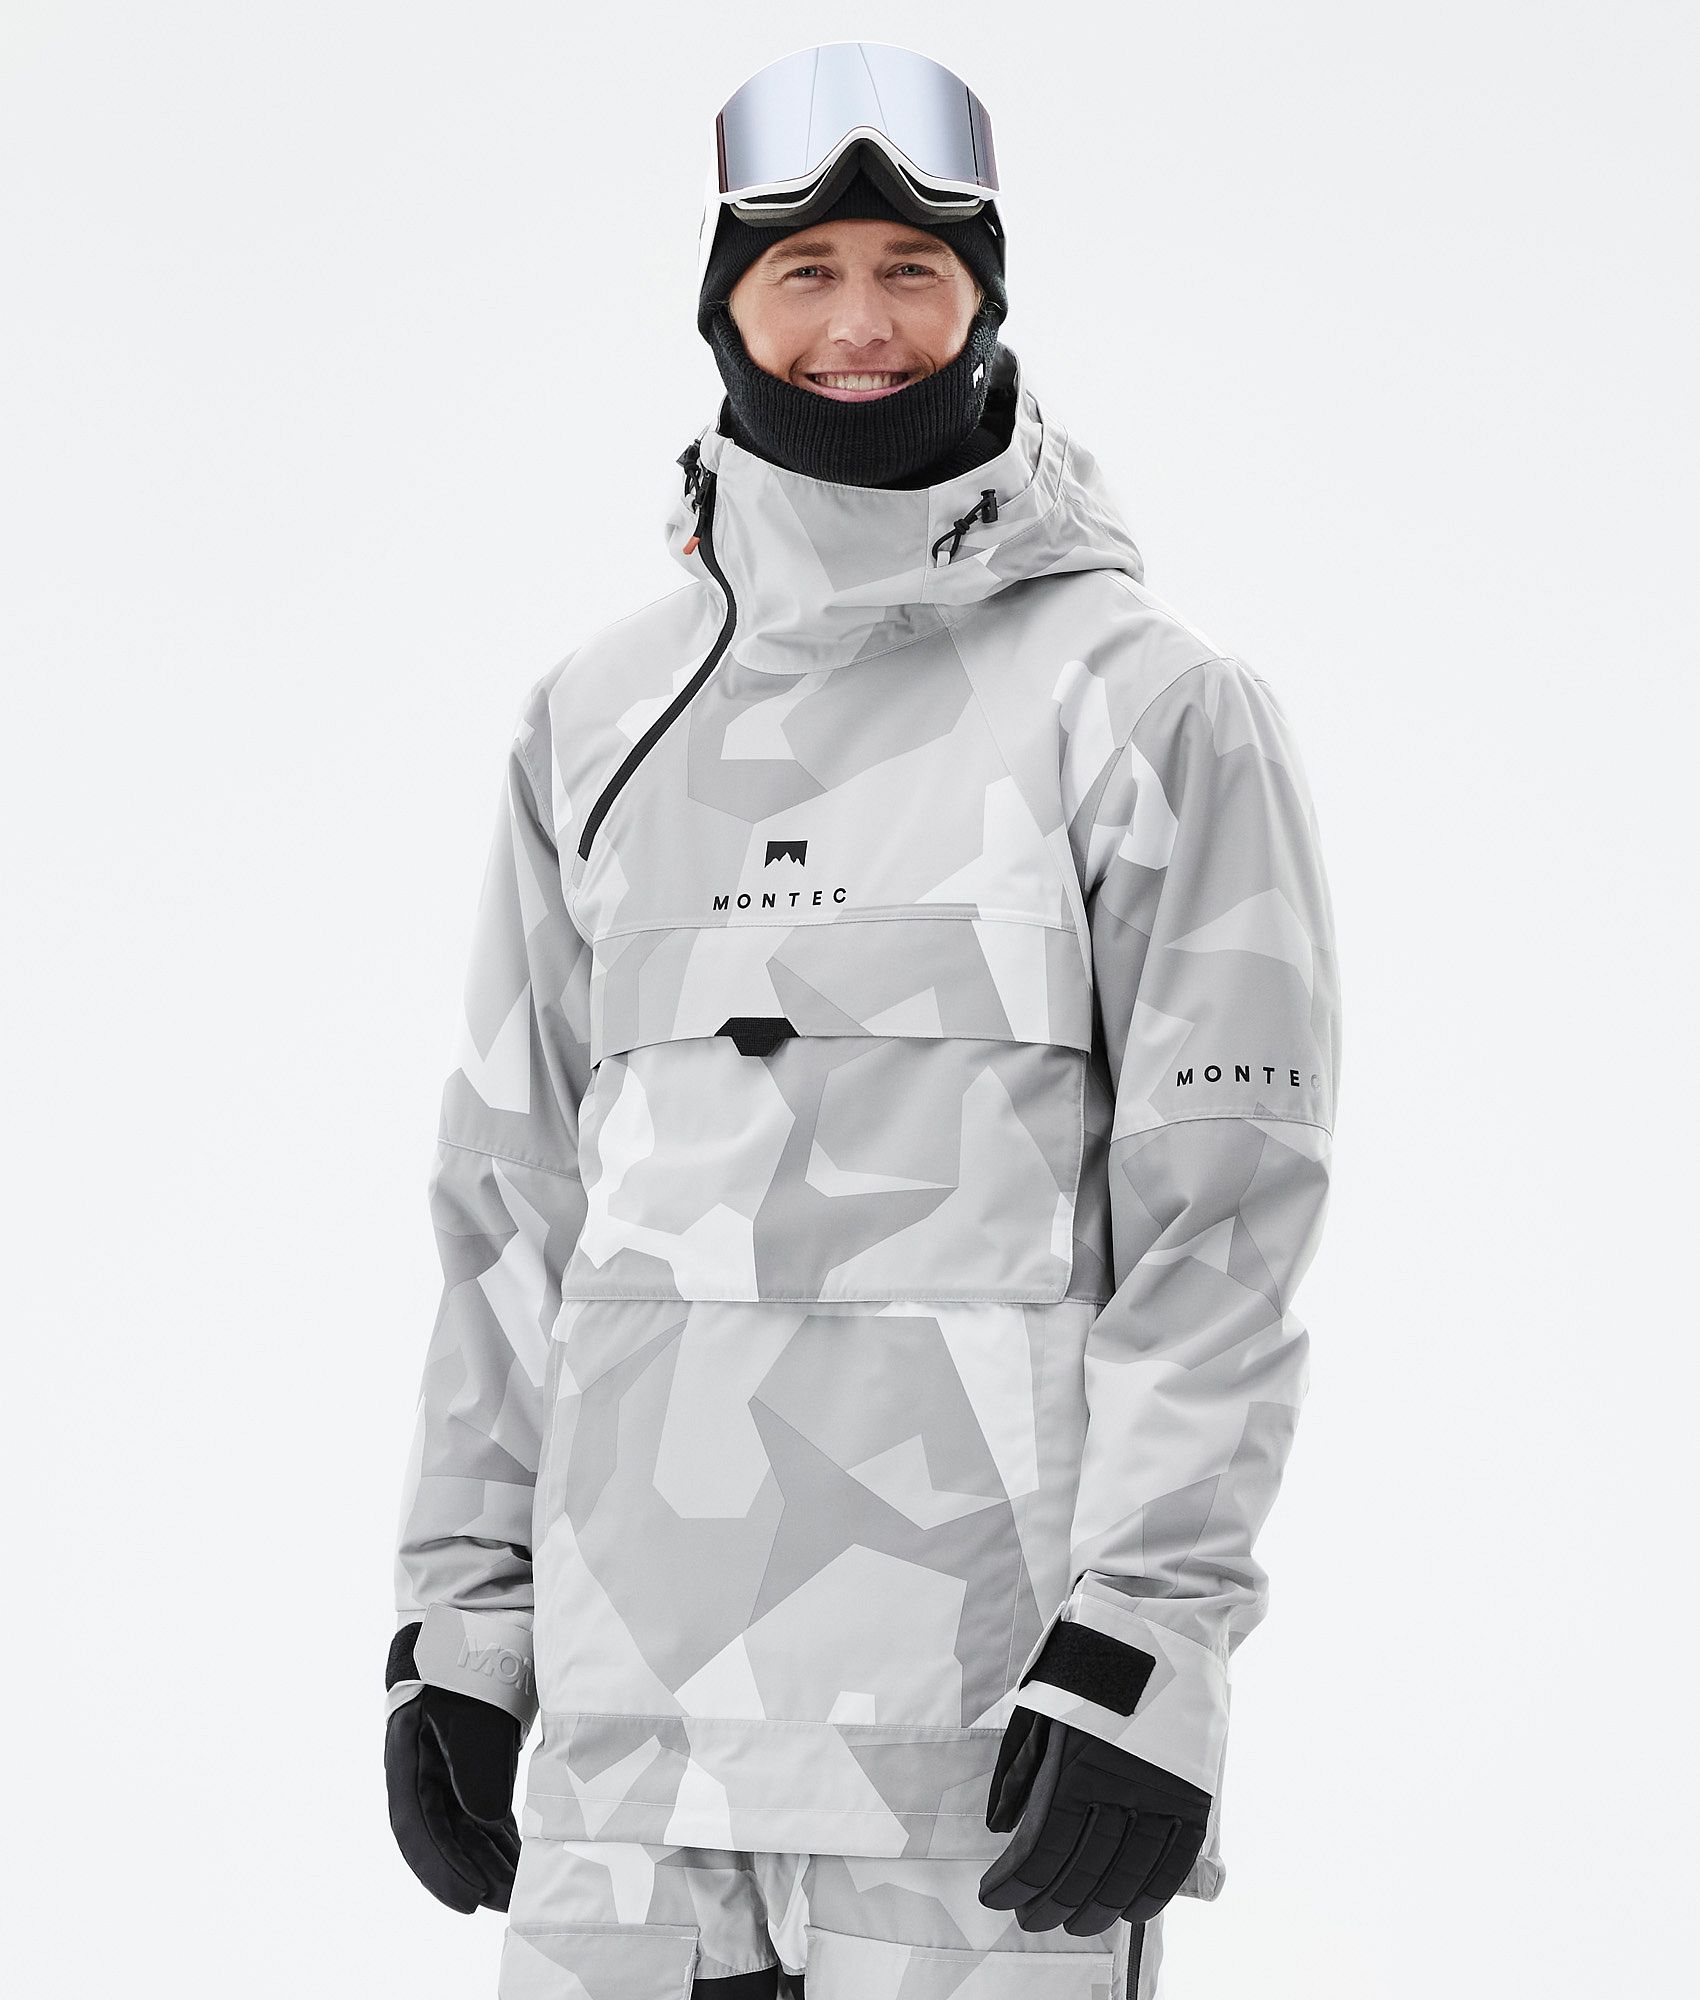 Mens Ski Clothing Free Delivery Montecwear